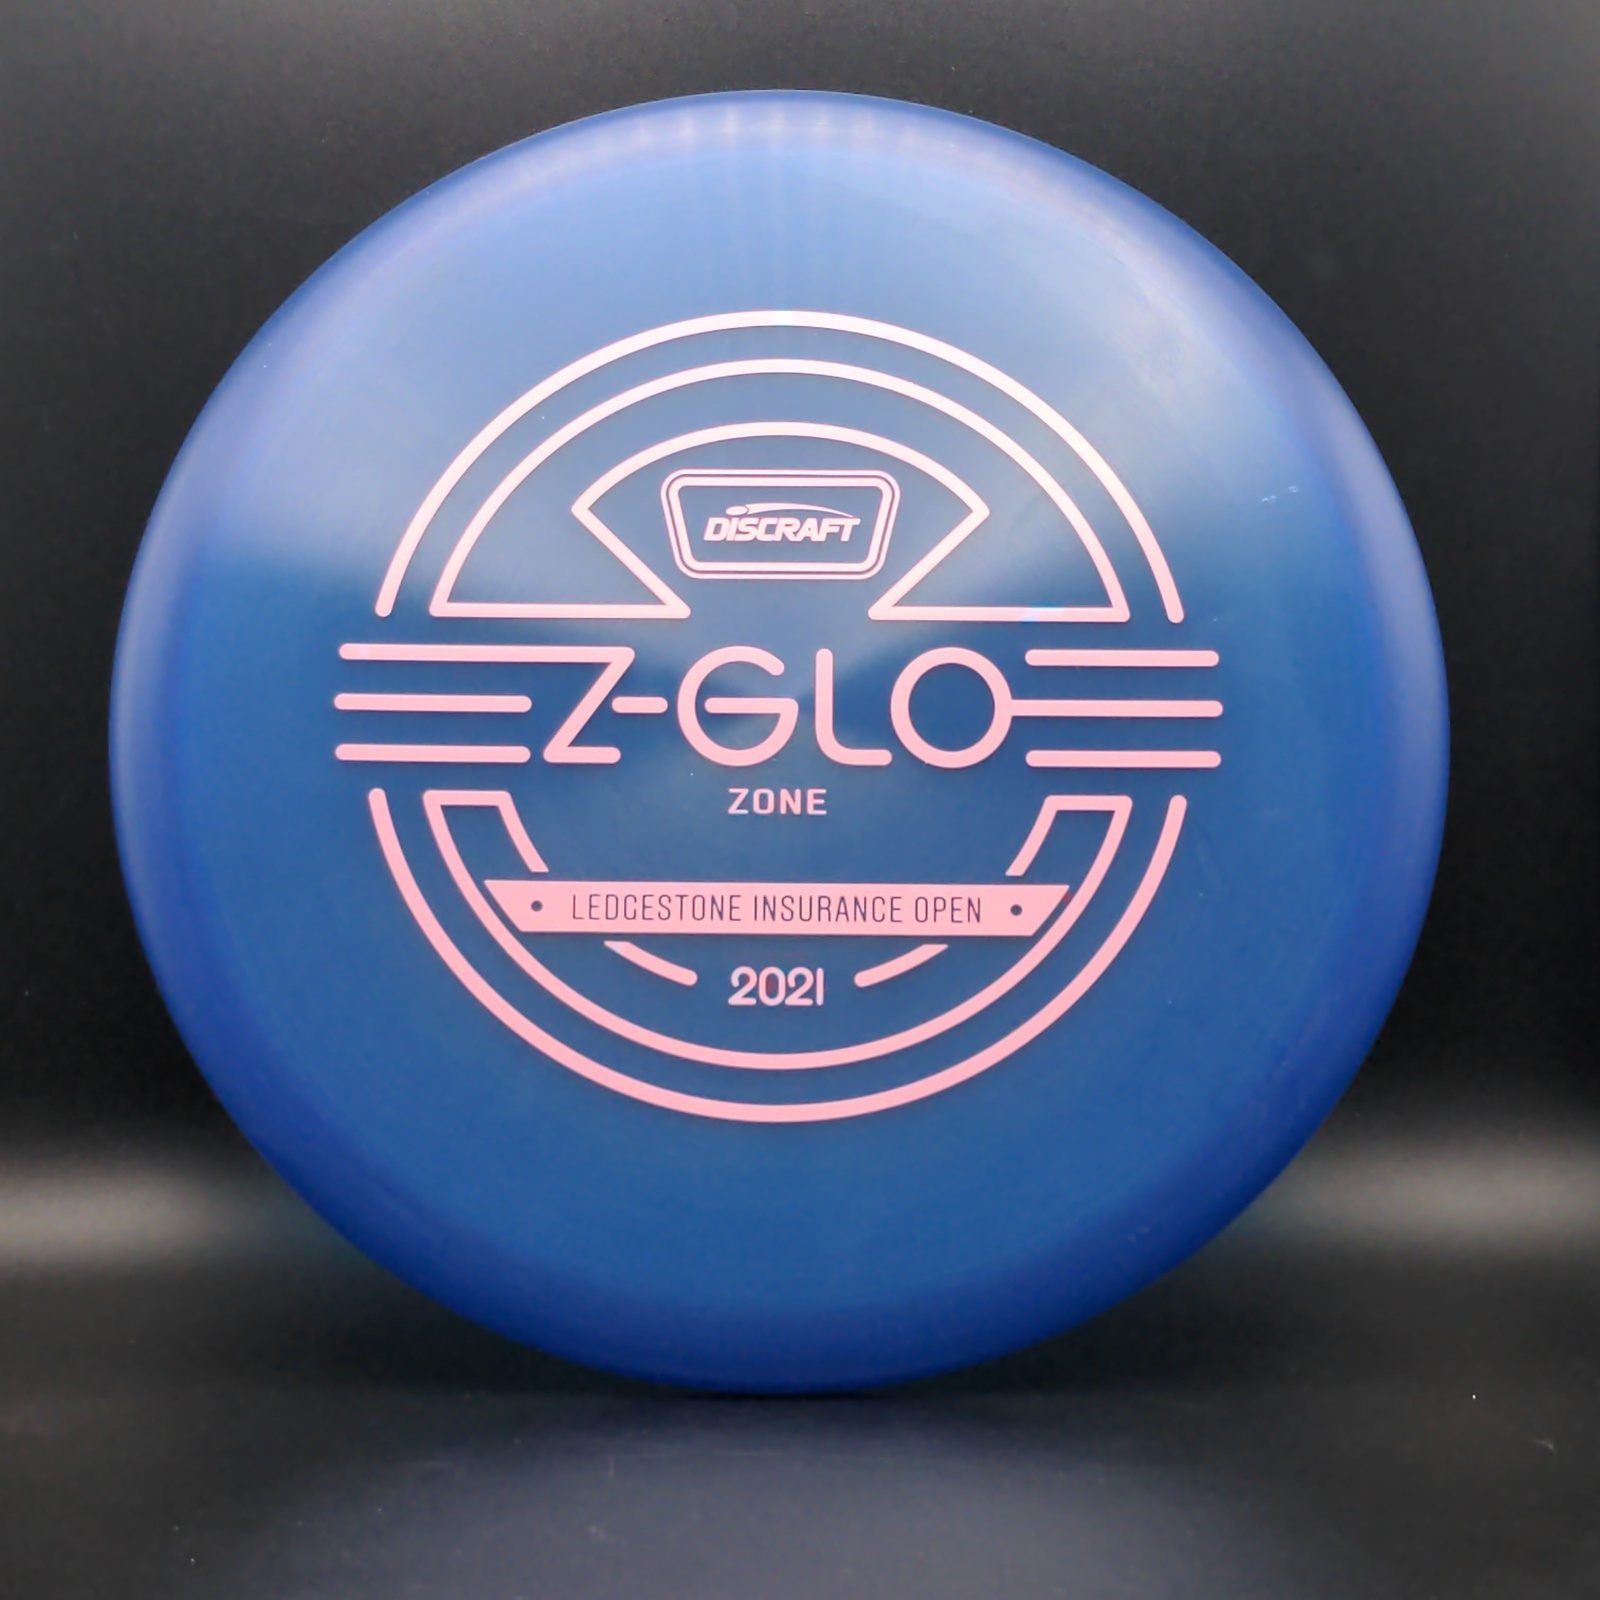 Z Glo Zone - Limited Edition 2021 Ledgestone Discraft